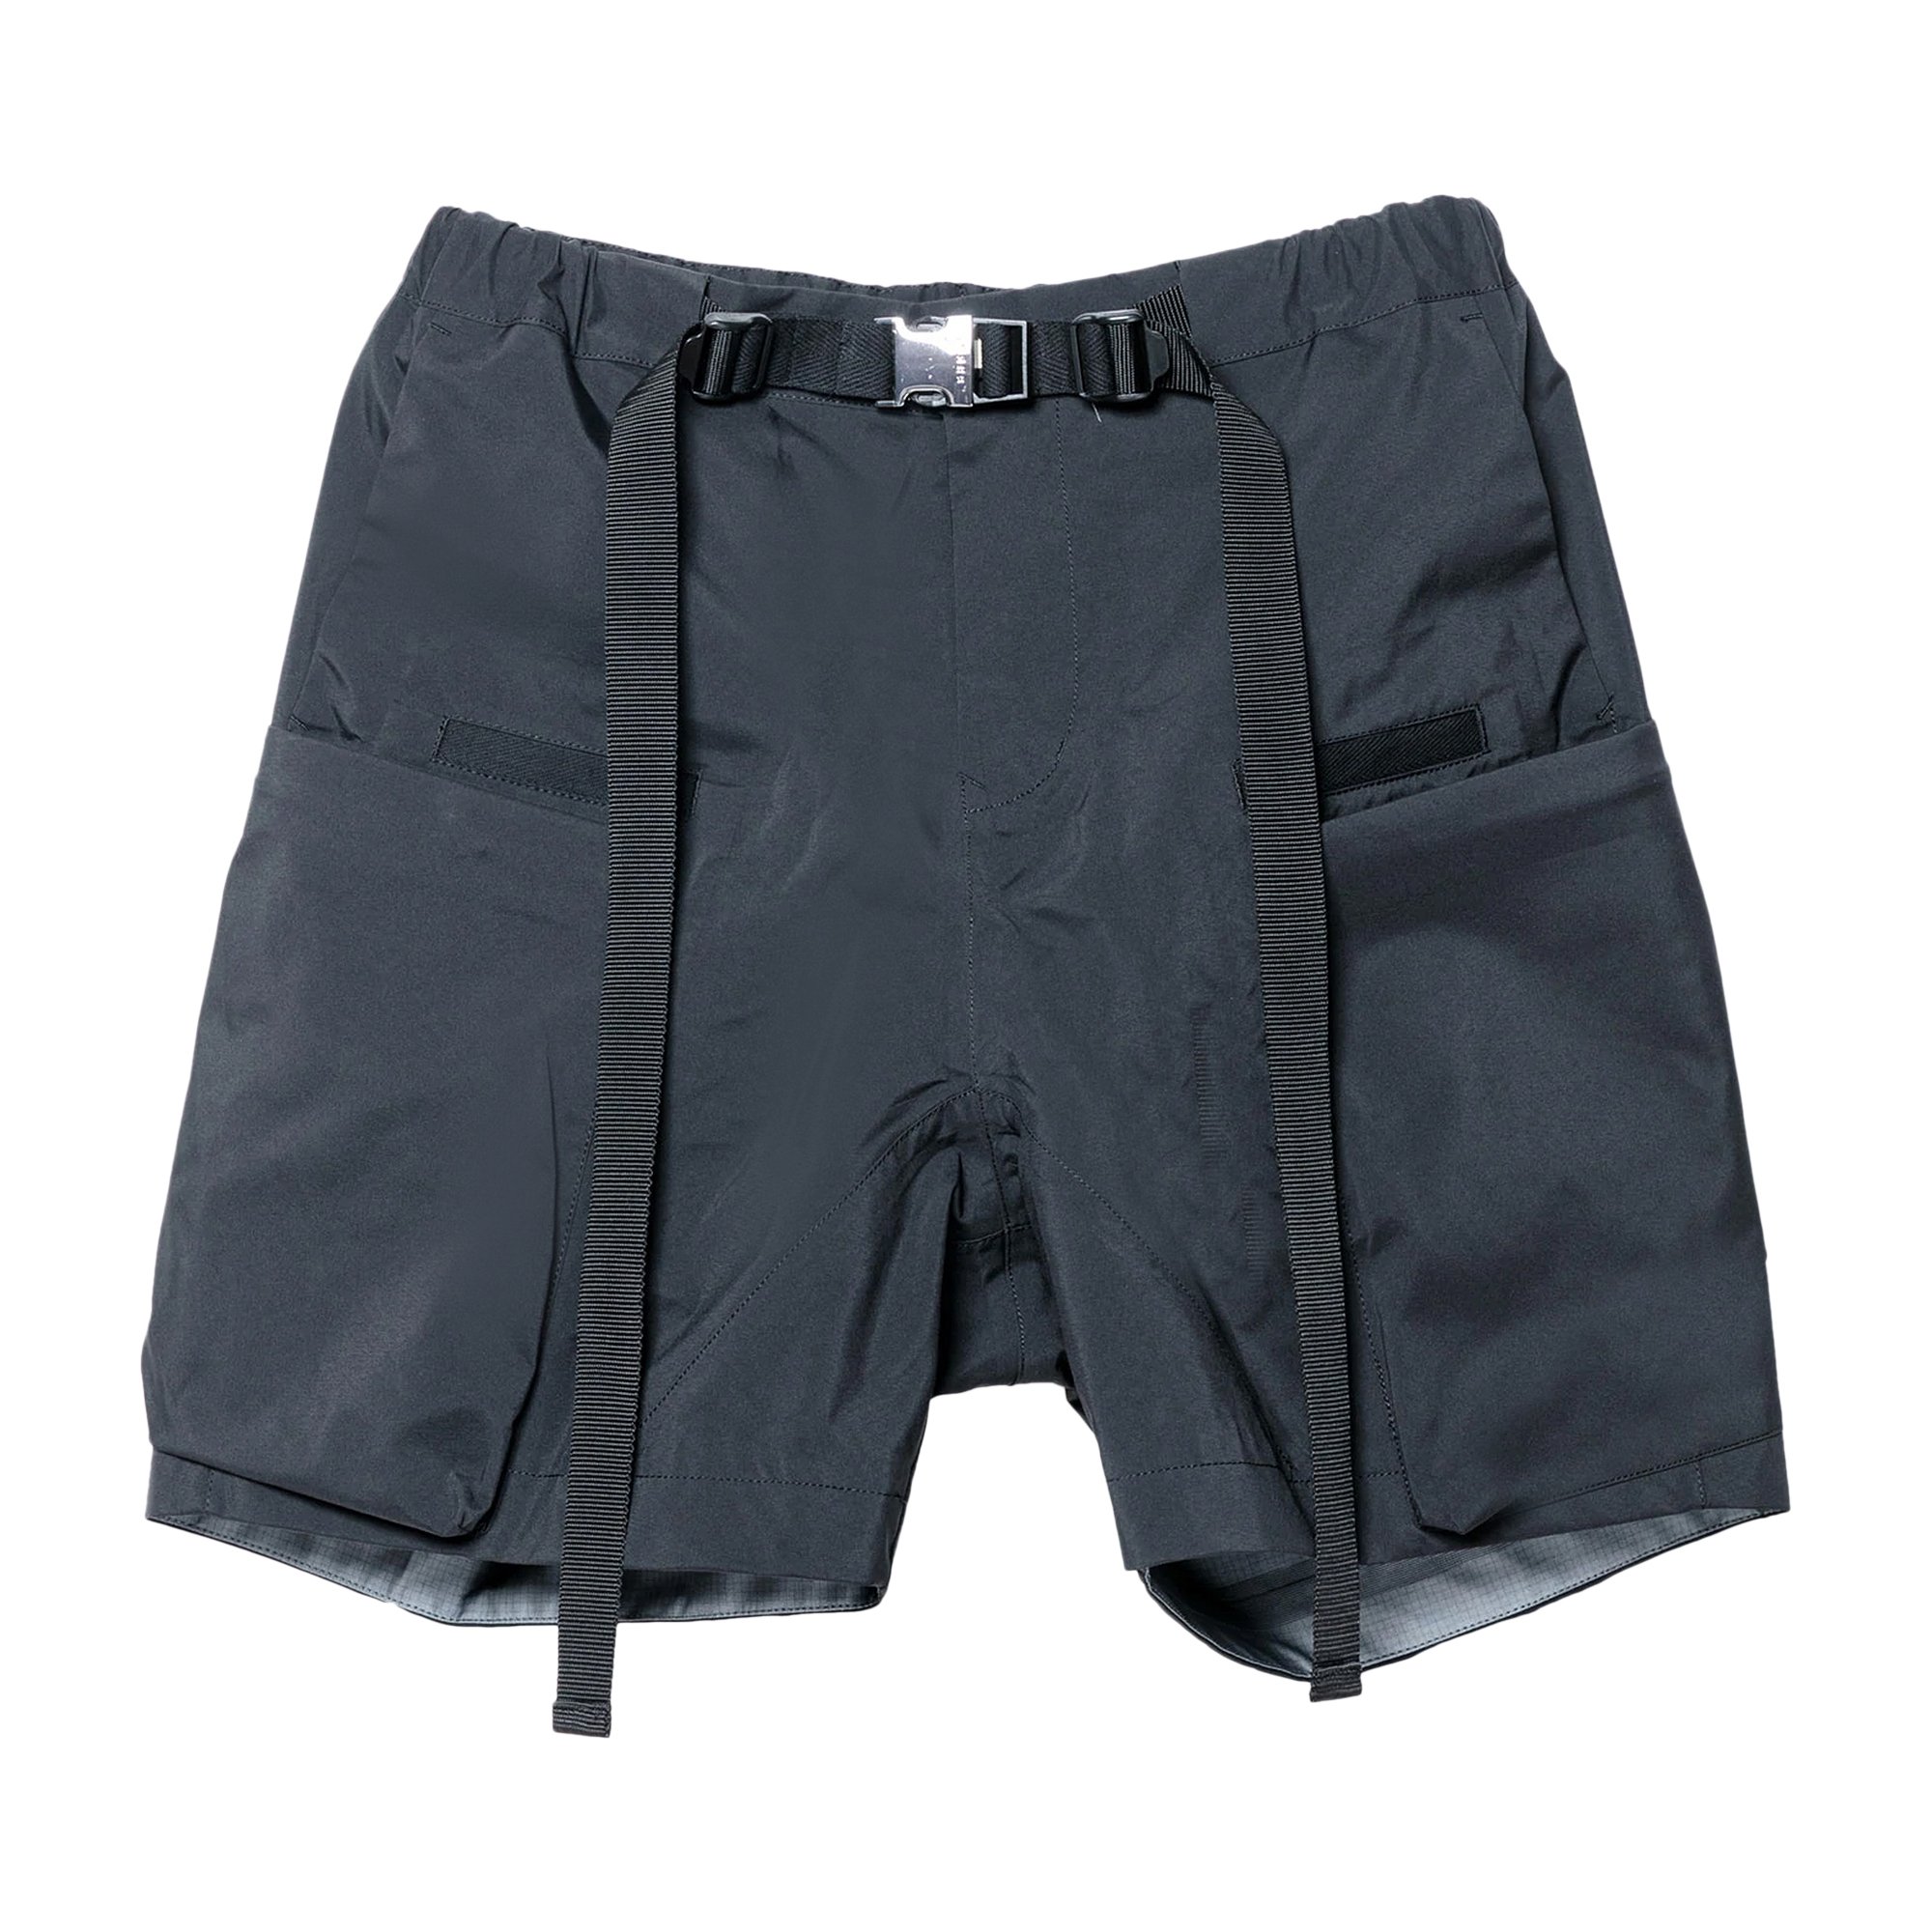 Buy Sacai x Acronym Shorts Black 'Black' - 22 02763M 001 | GOAT